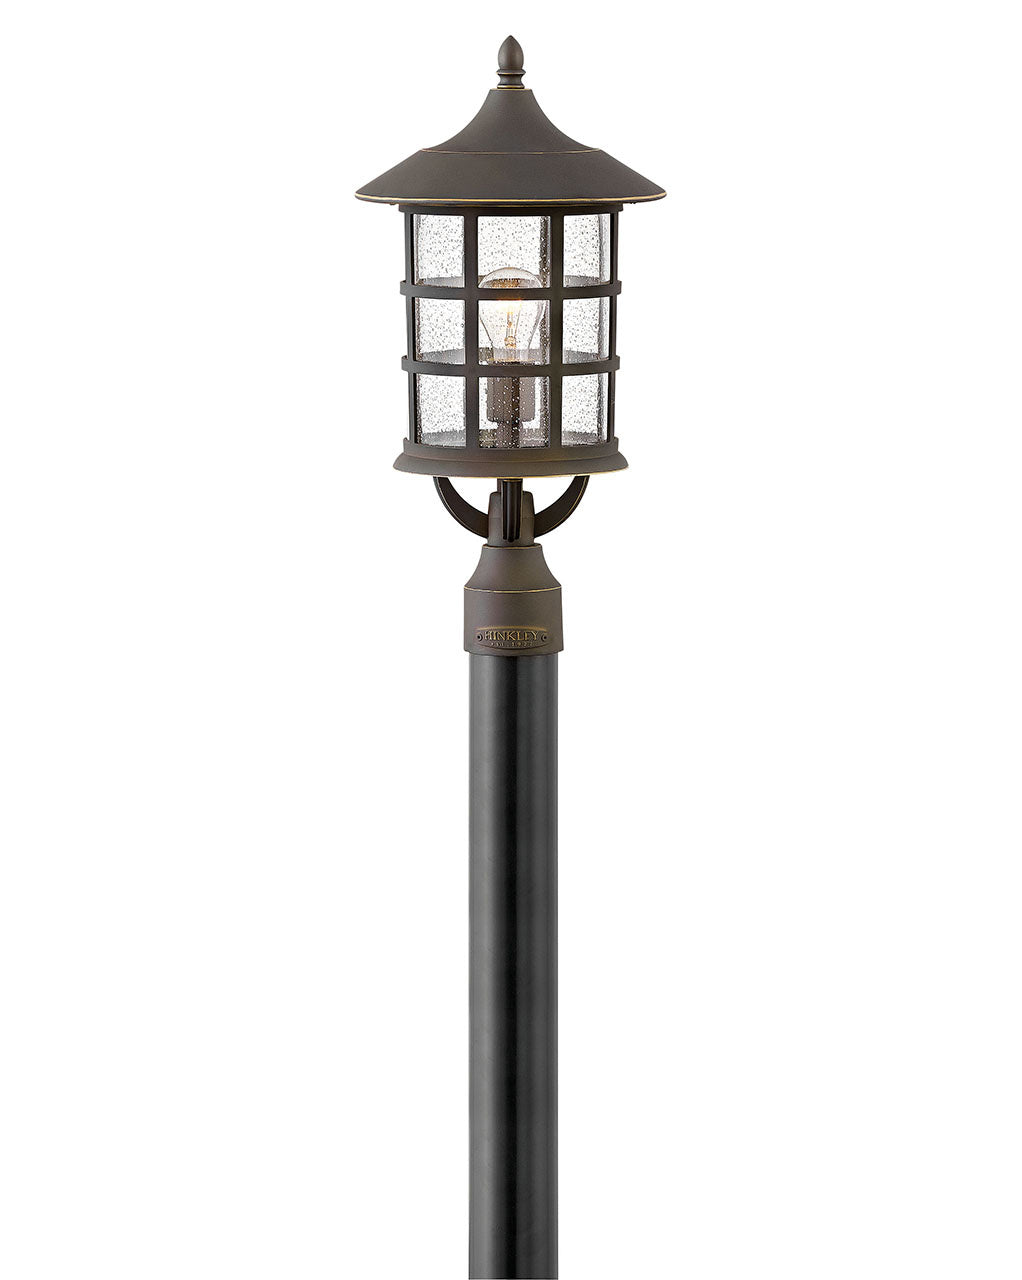 Hinkley Canada - LED Post Top or Pier Mount Lantern - Freeport Coastal Elements - Oil Rubbed Bronze- Union Lighting Luminaires Decor